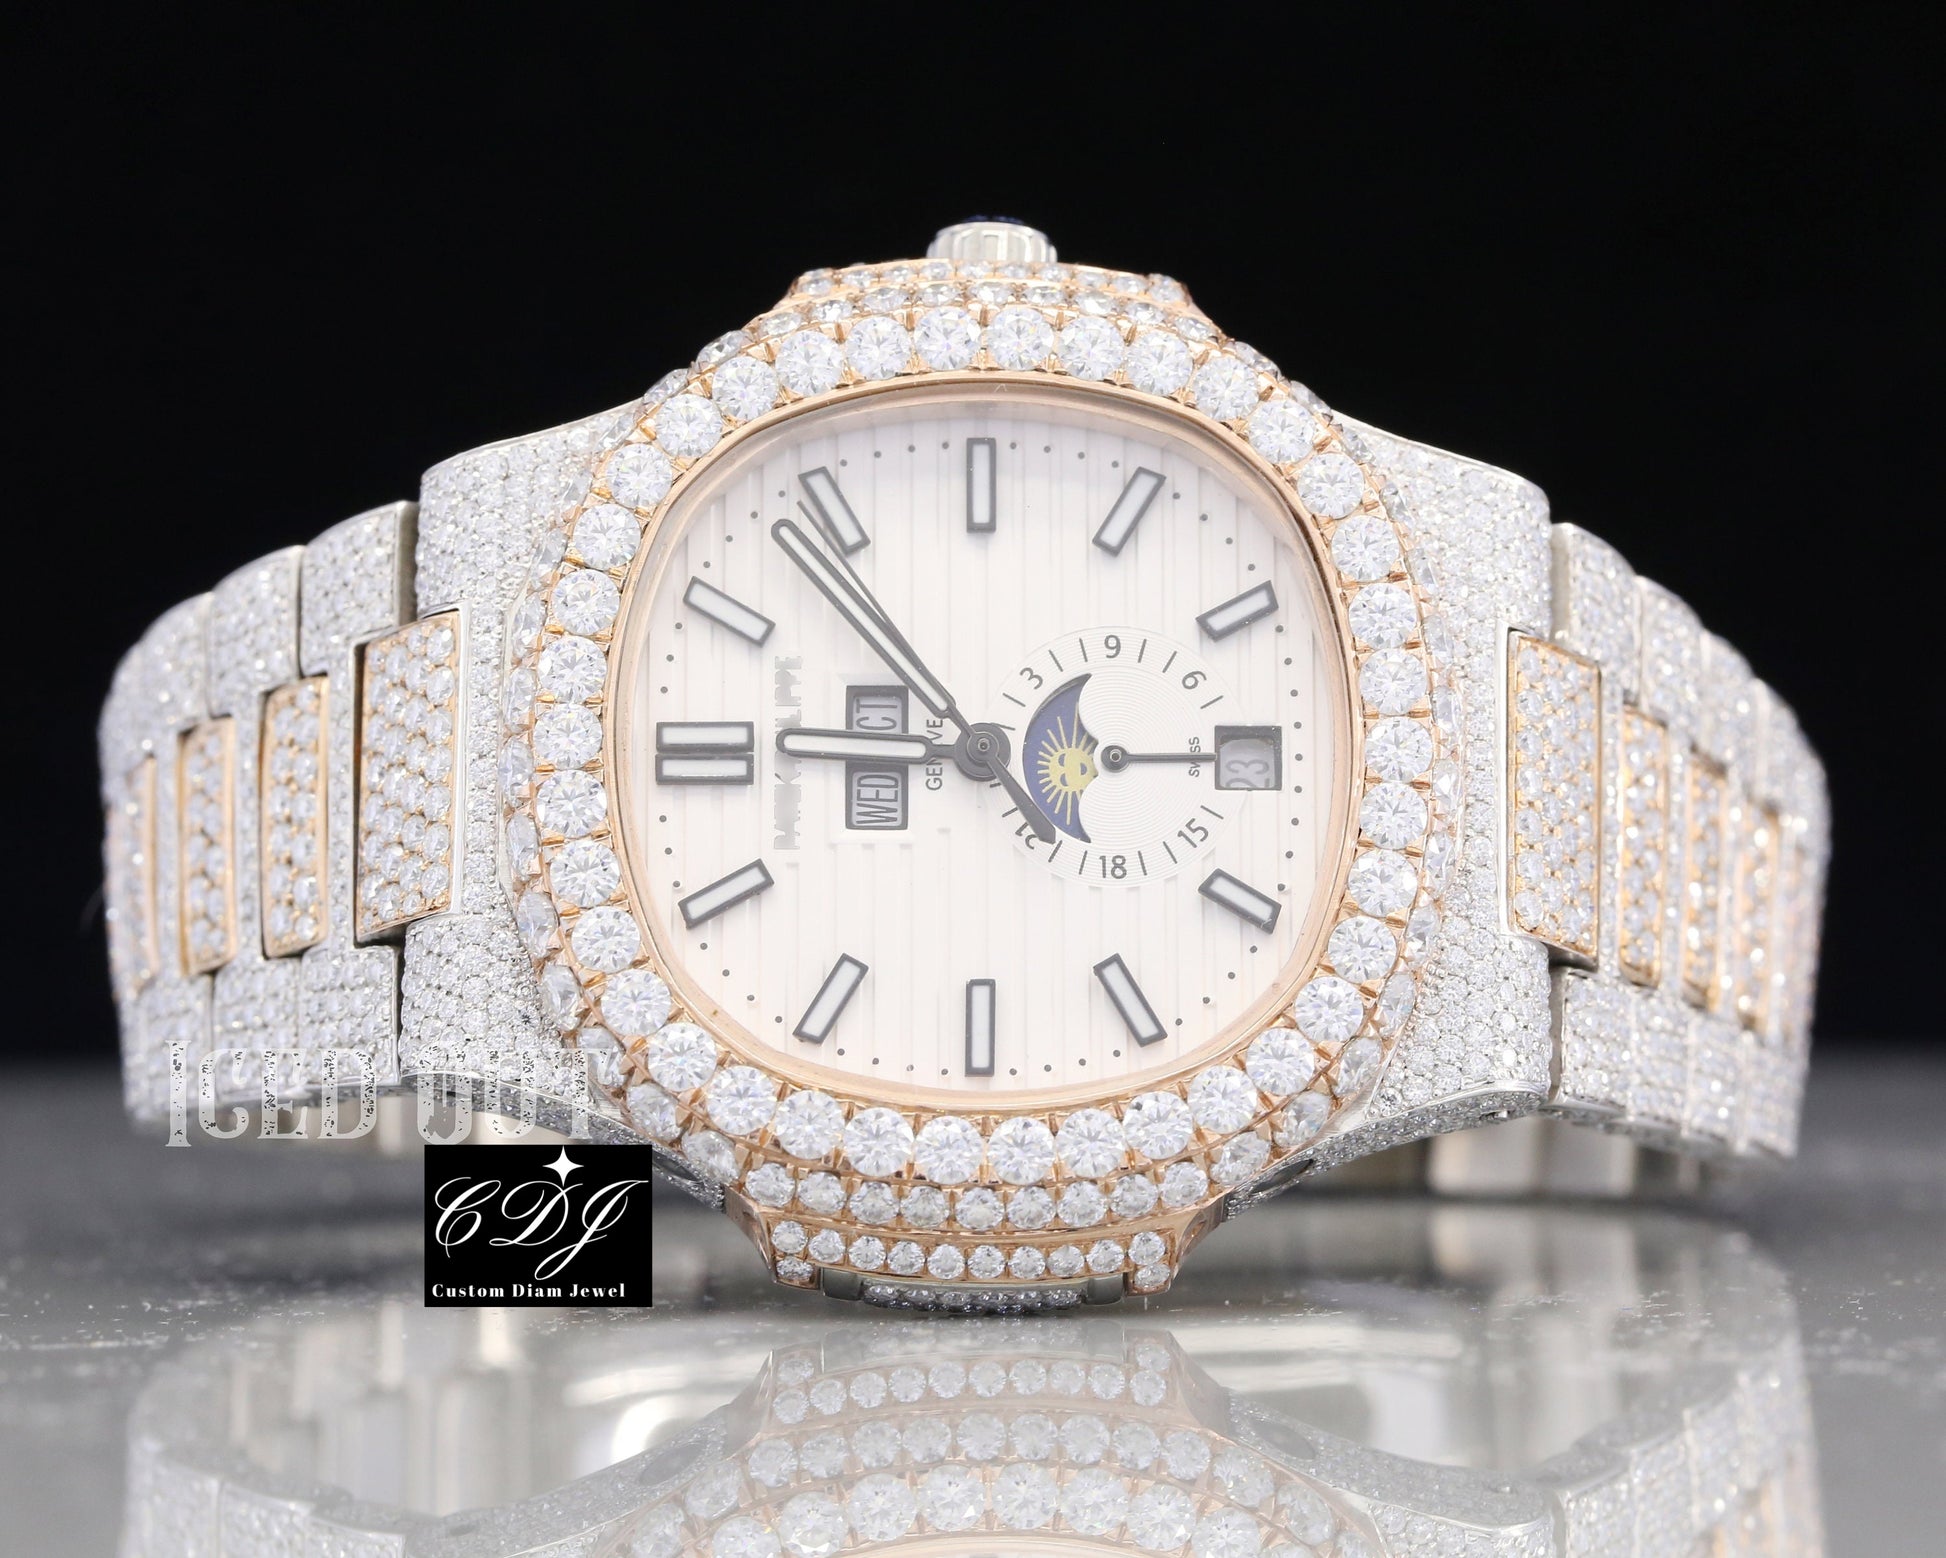 Two Tone Ice Out Luxury Diamond Watch (27.5 CT Approx)  customdiamjewel   